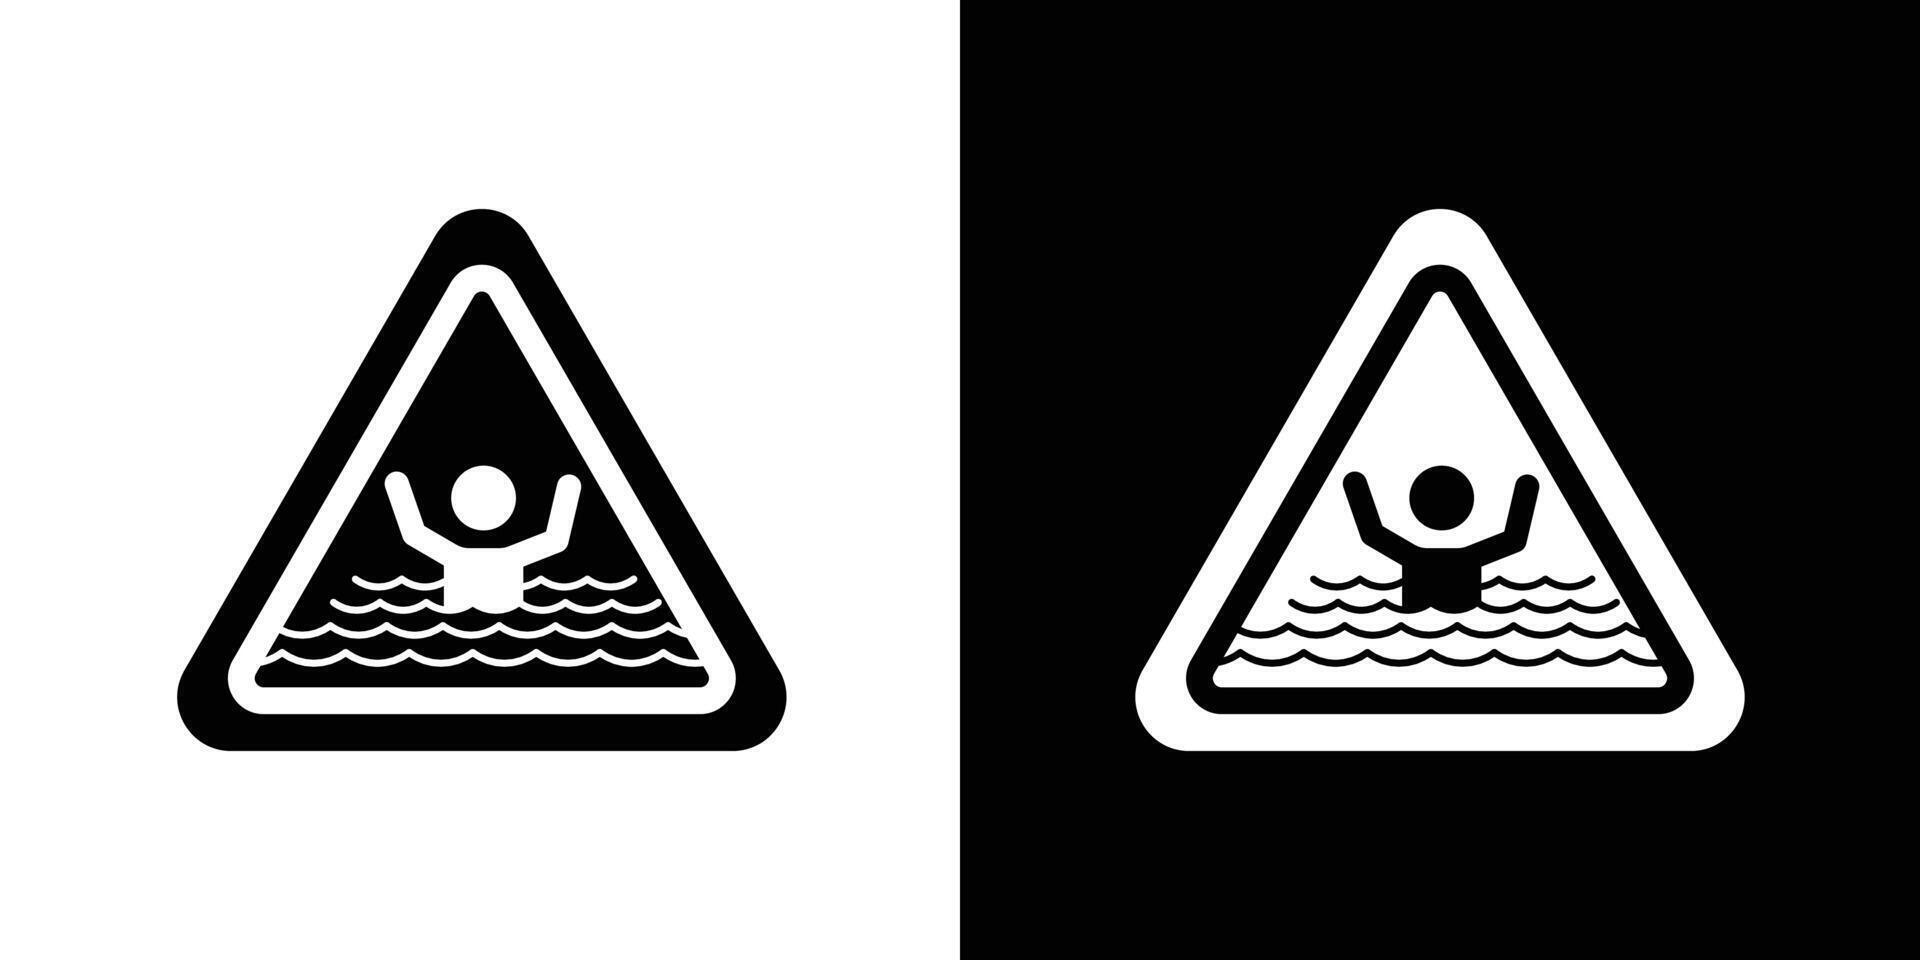 Risk of drowning warning sign vector